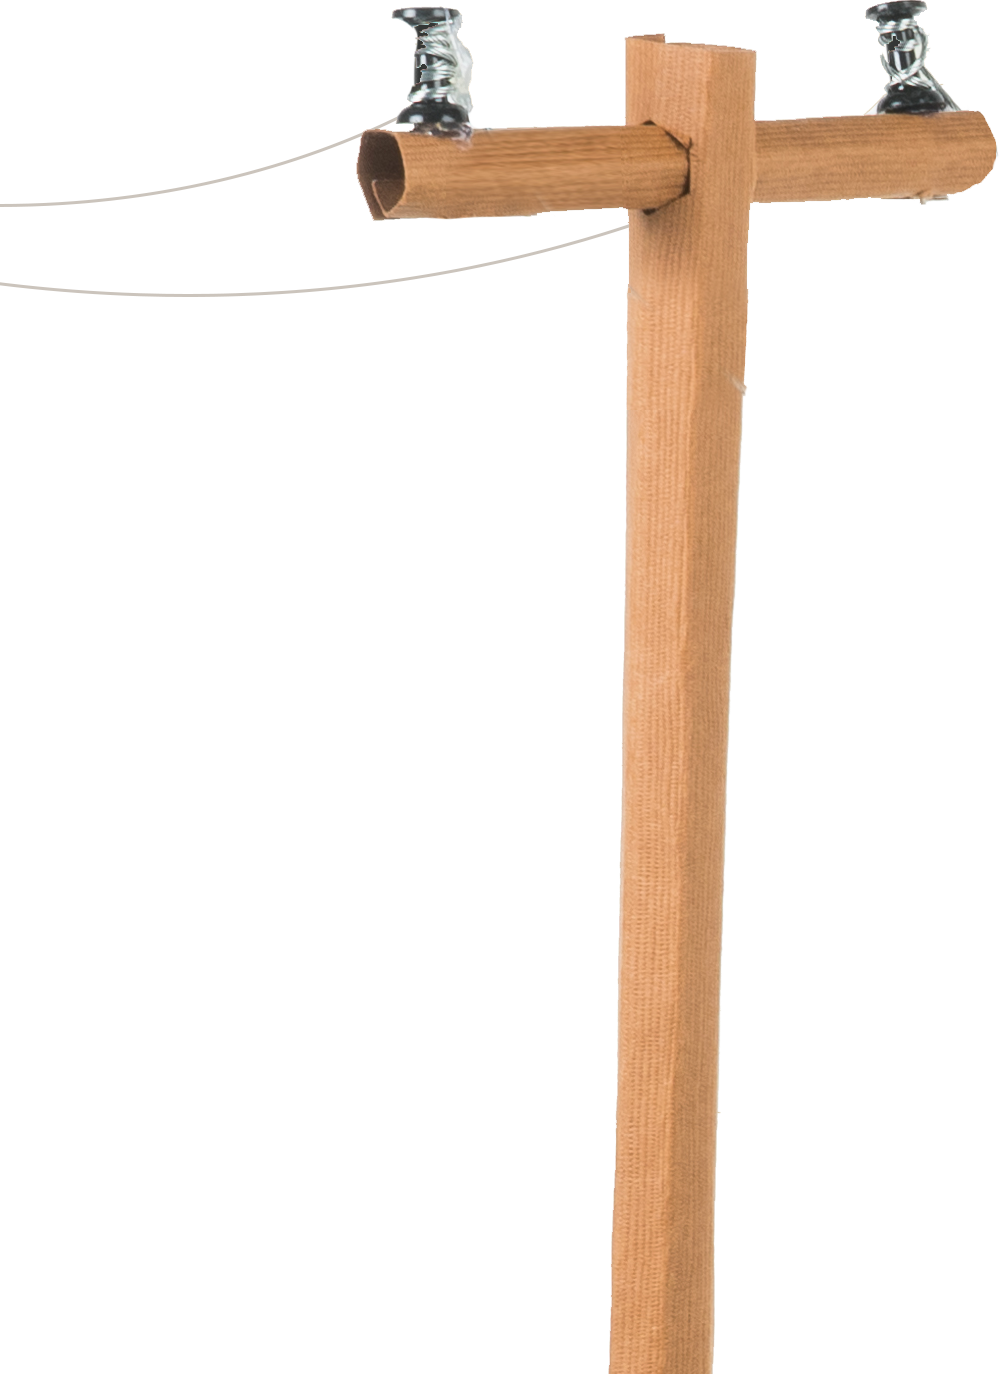 Power line pole